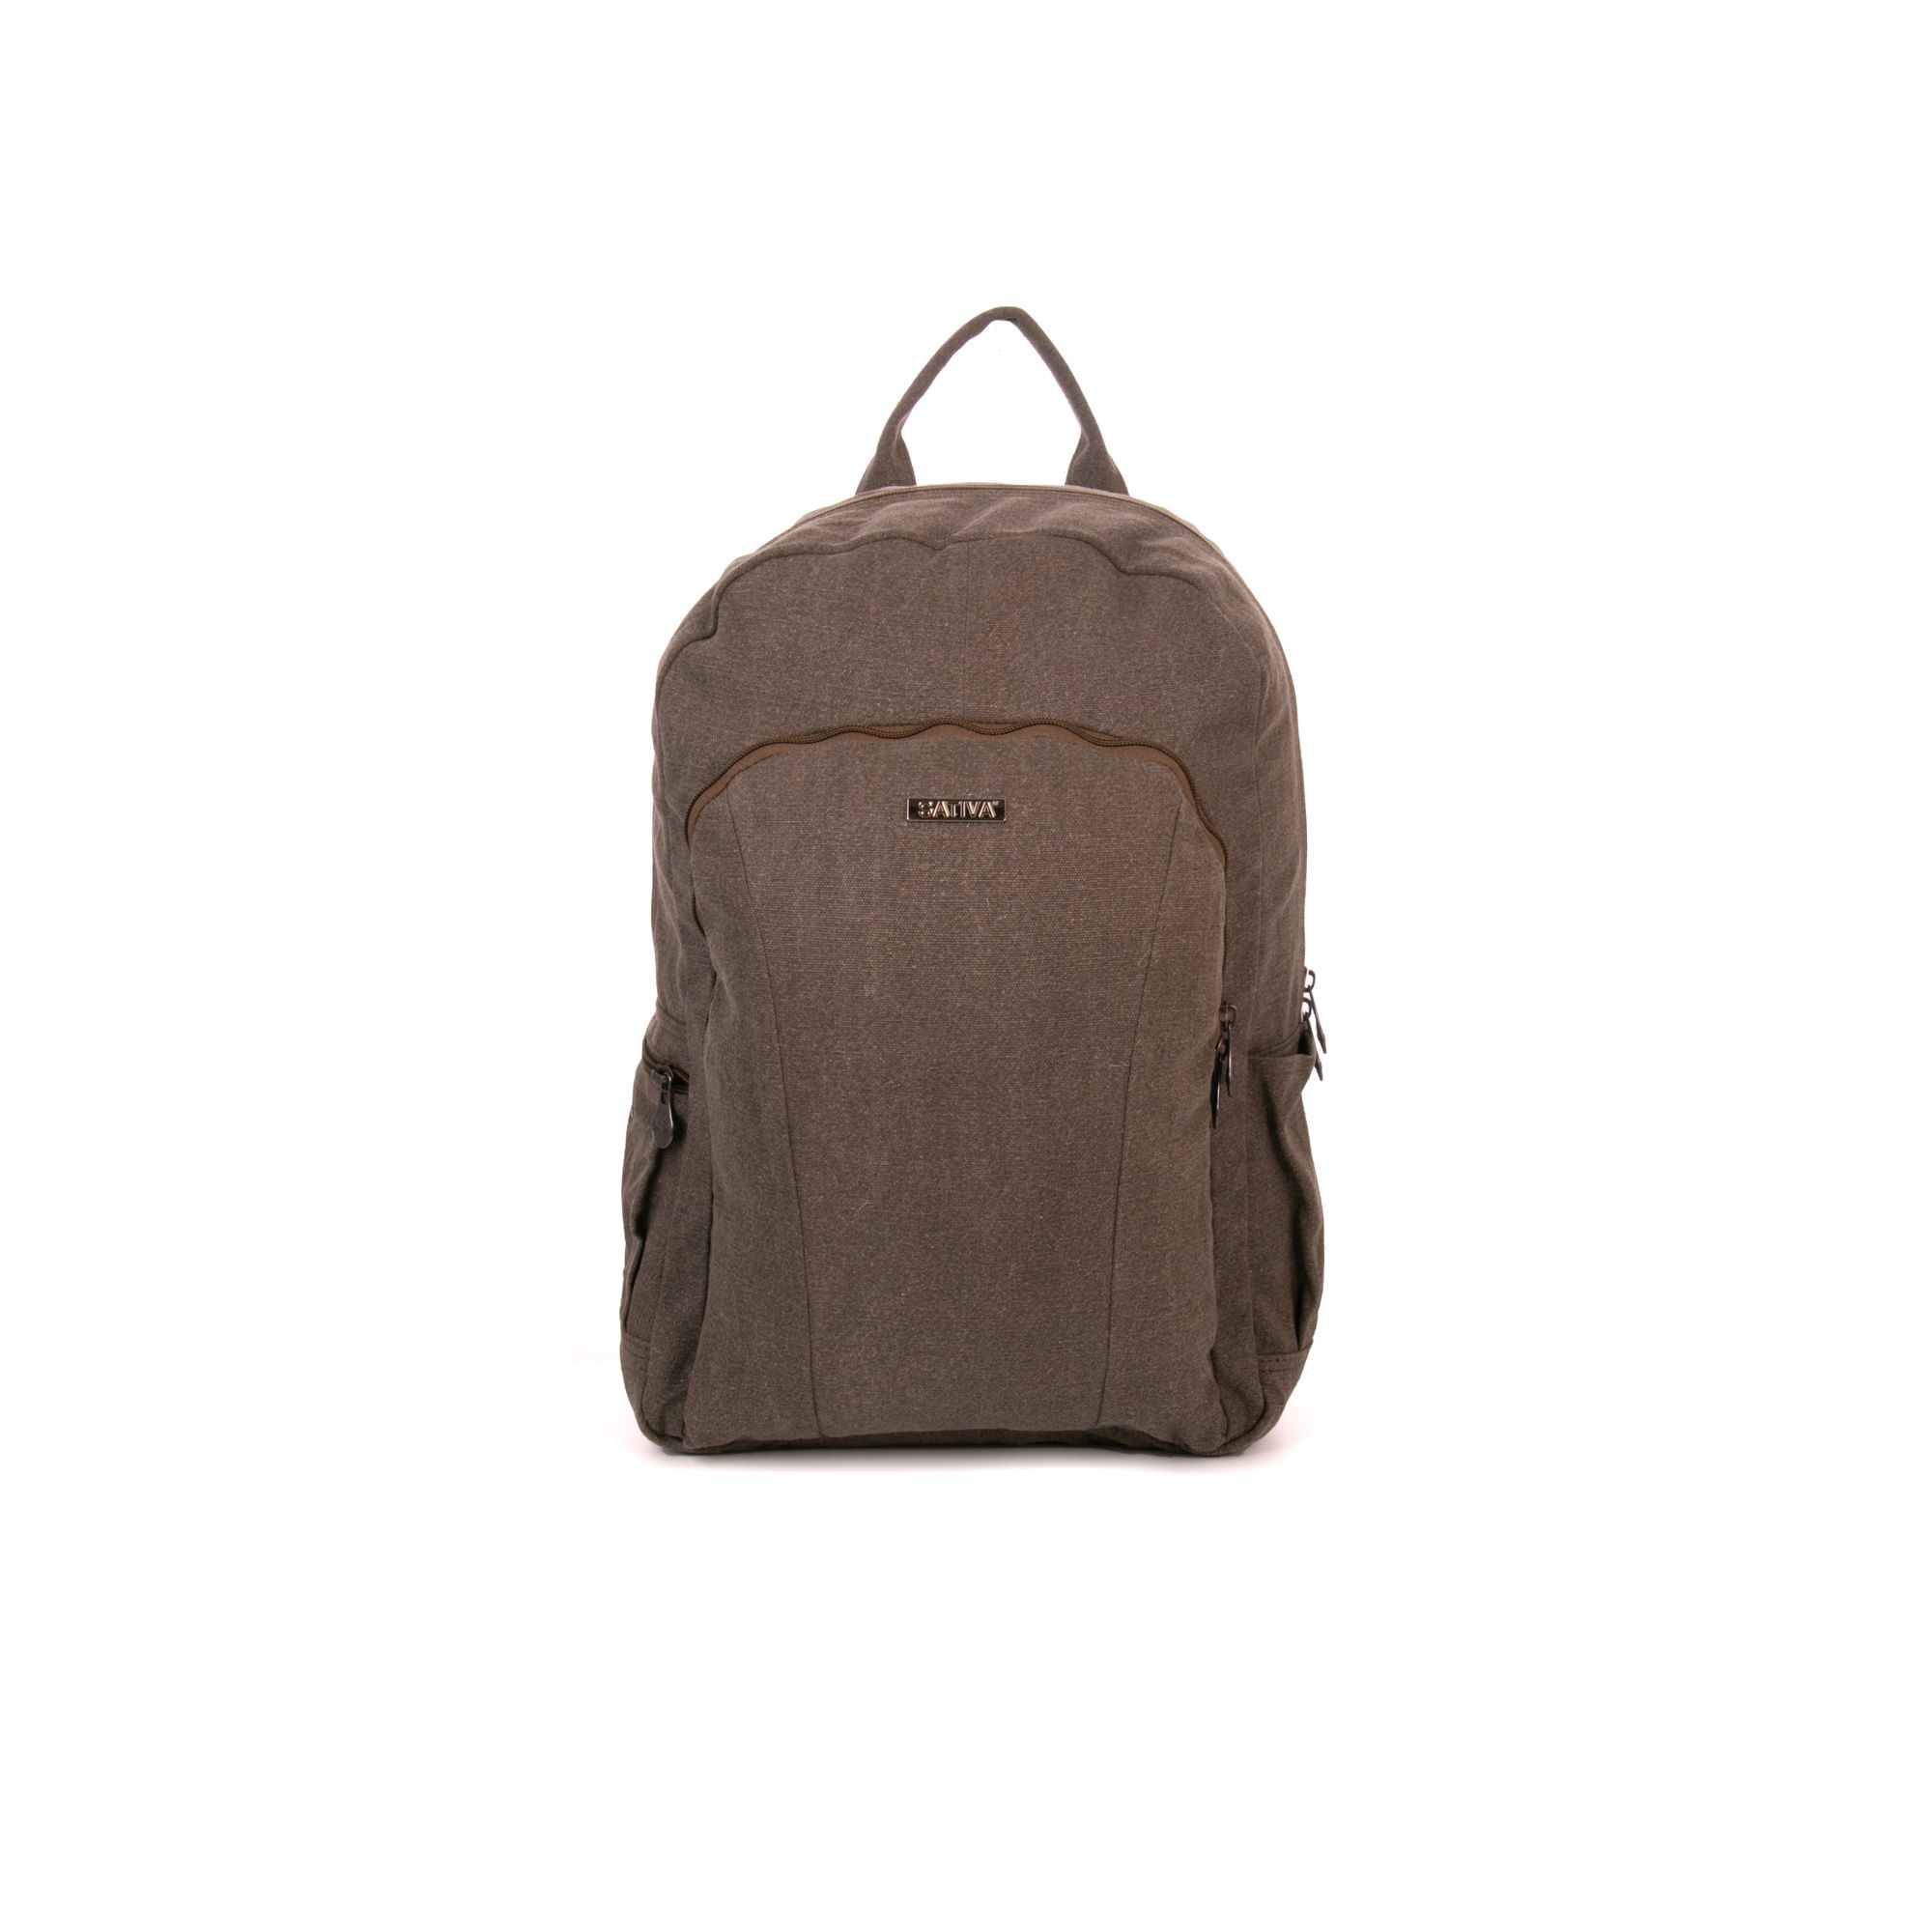 Laptop-Bag/-Backpack    Zum Produkt